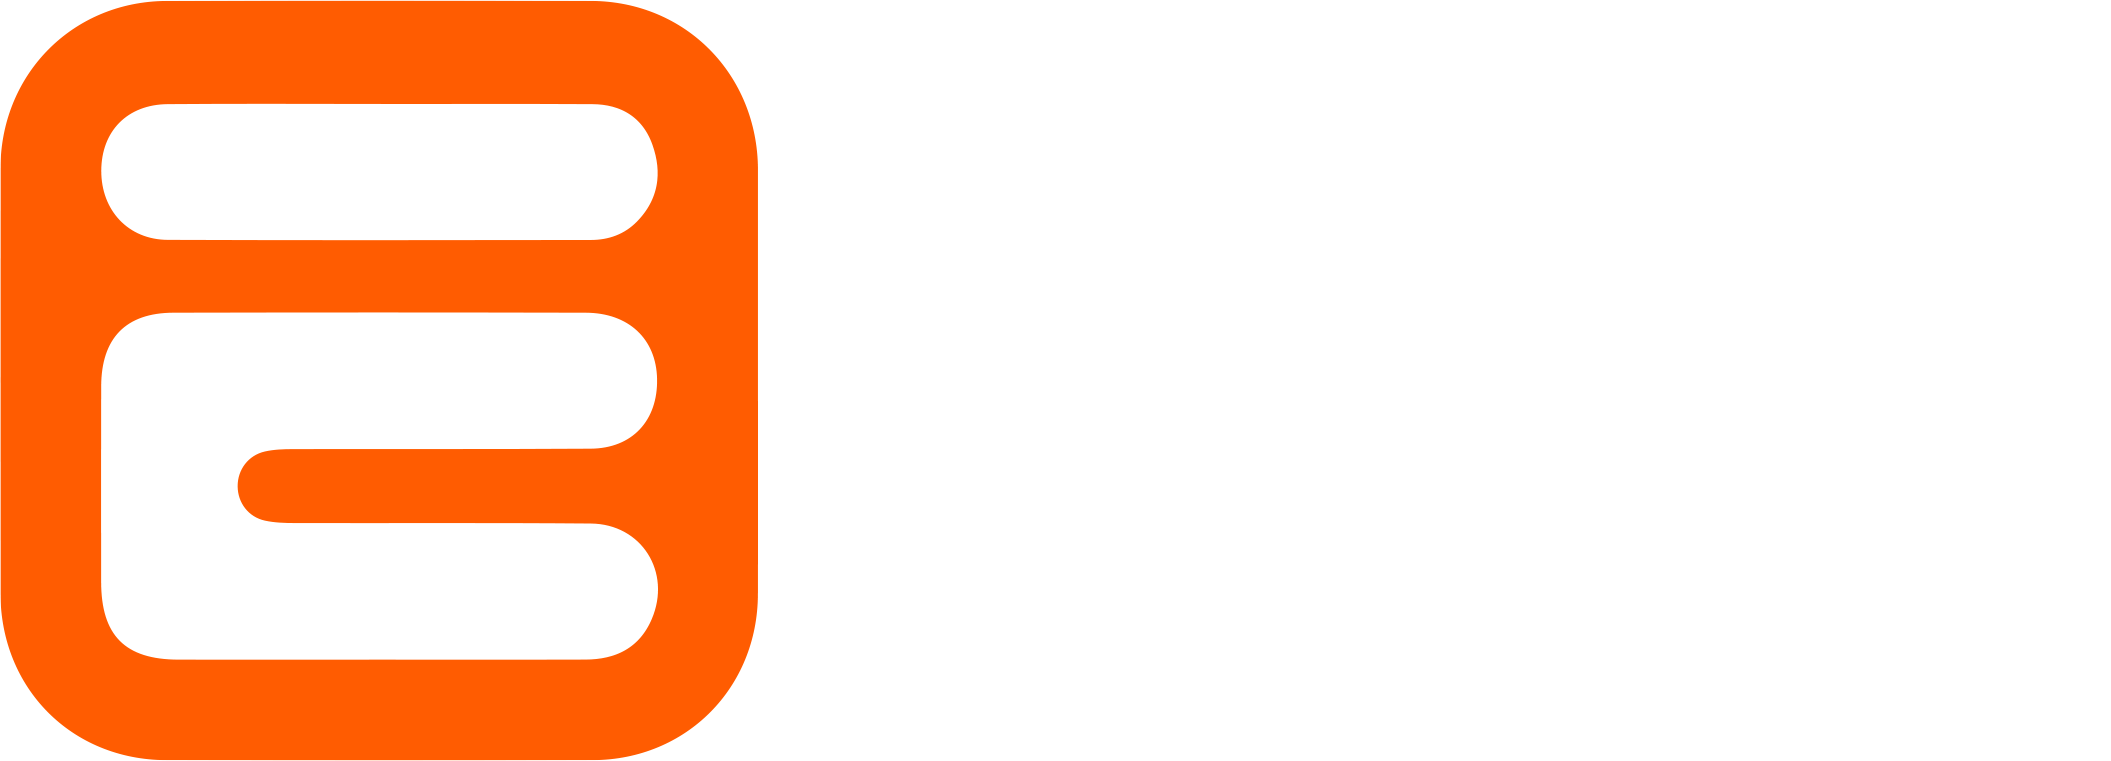 eigenics-logo